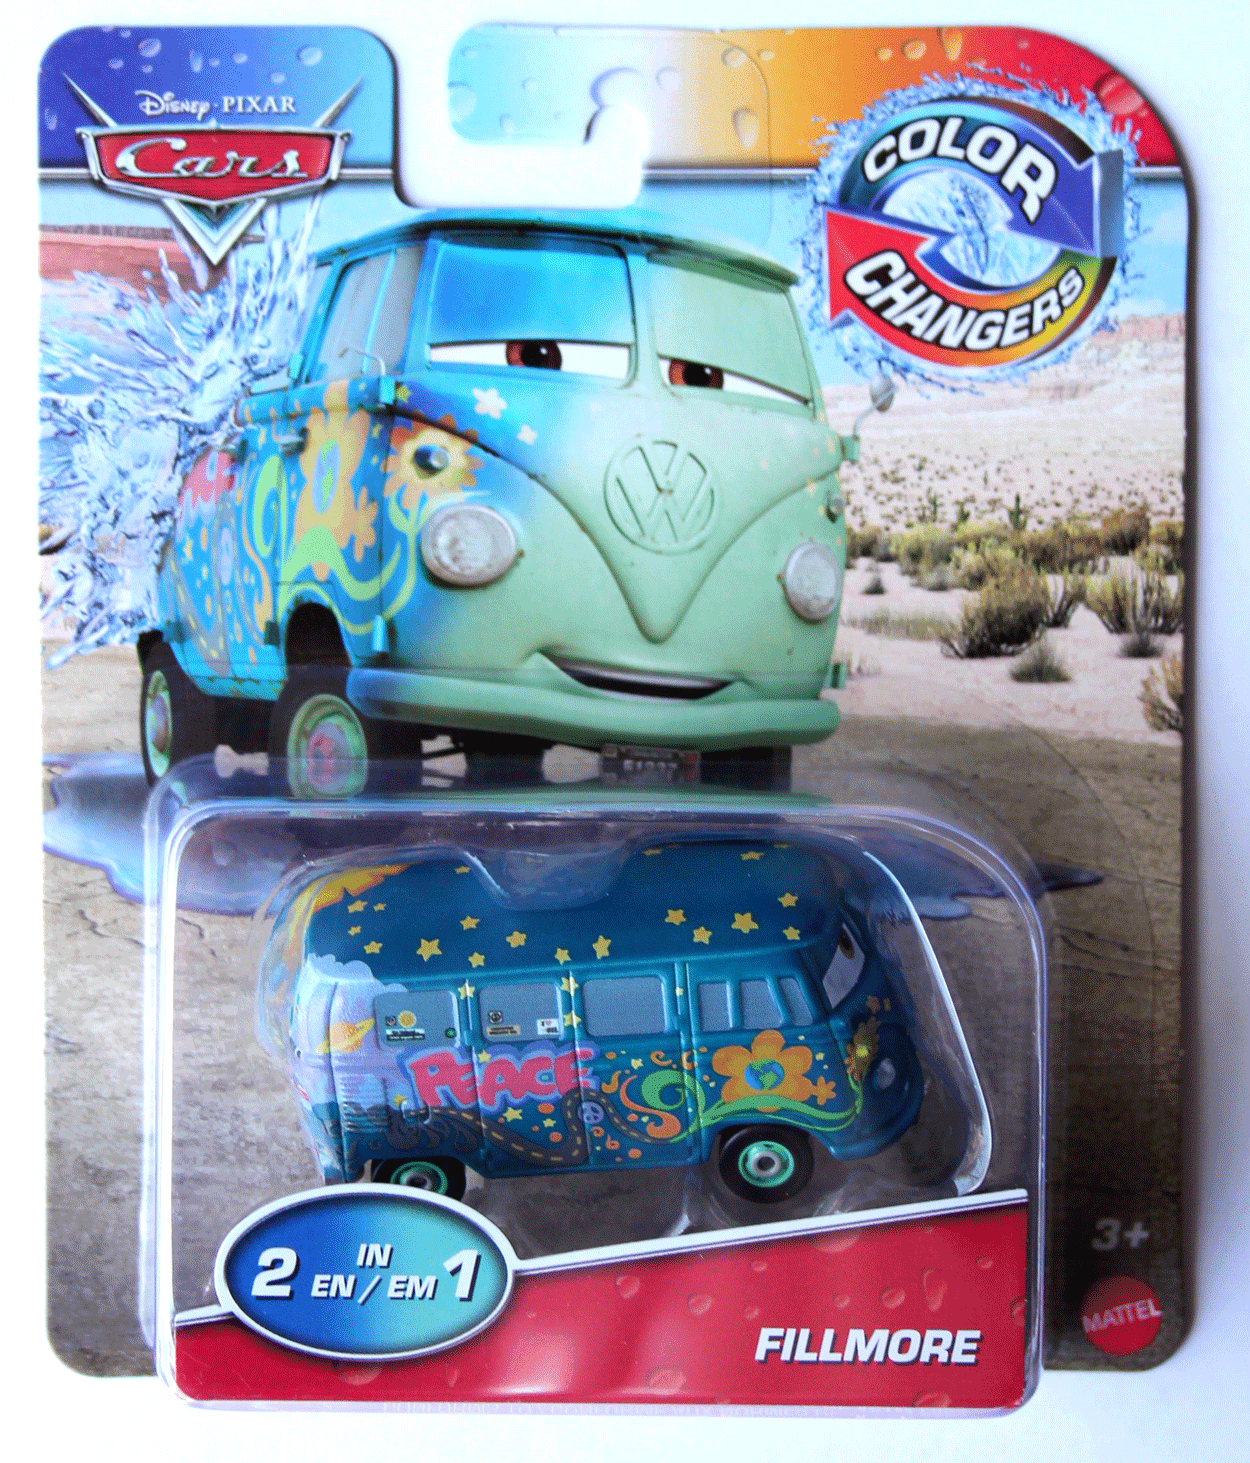 Original Mattel Disney Pixar Cars Changers Color Rare McQueen Sally Sheriff Cars